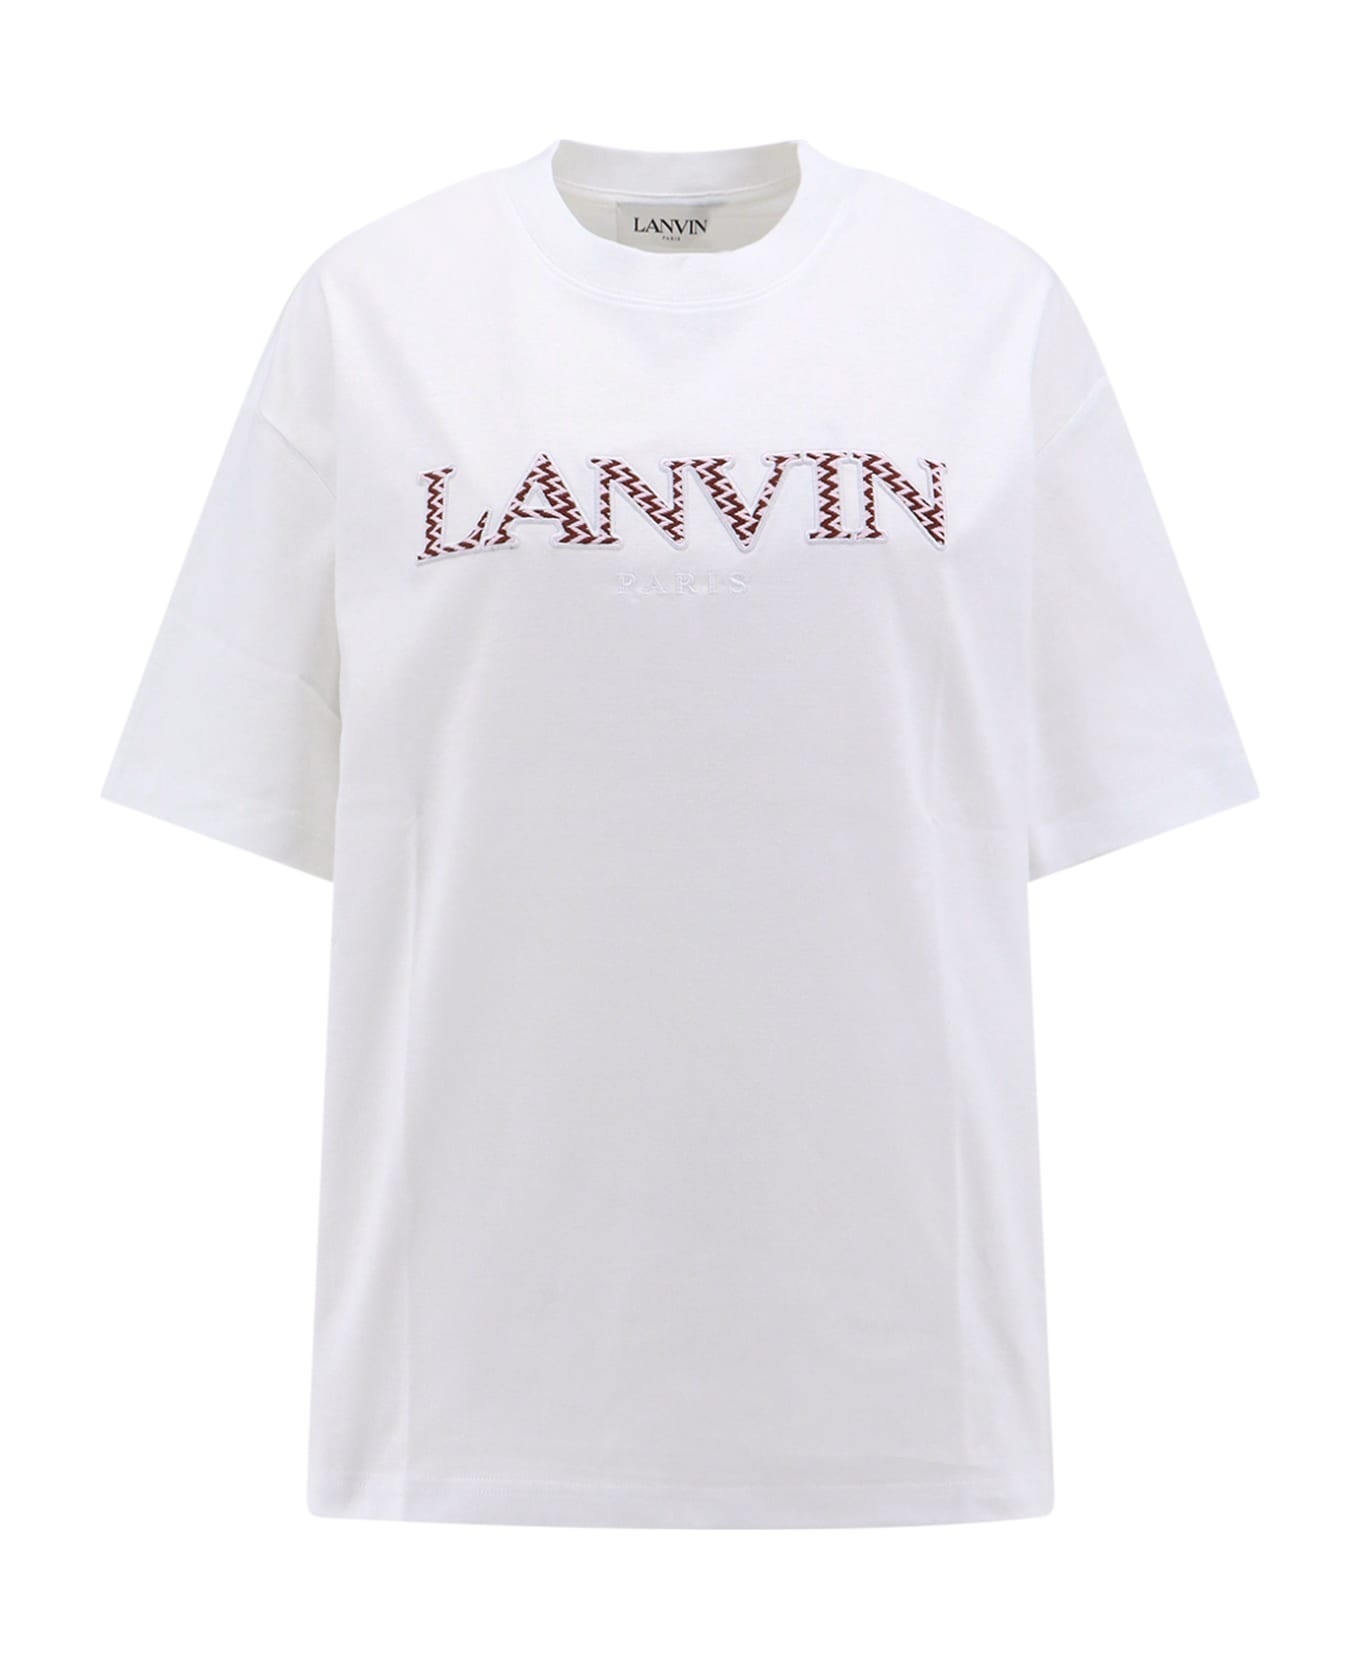 Lanvin T-shirt - White Tシャツ